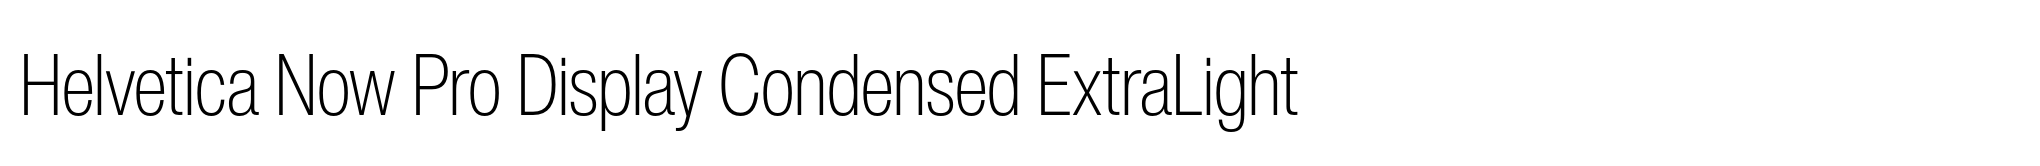 Helvetica Now Pro Display Condensed ExtraLight image